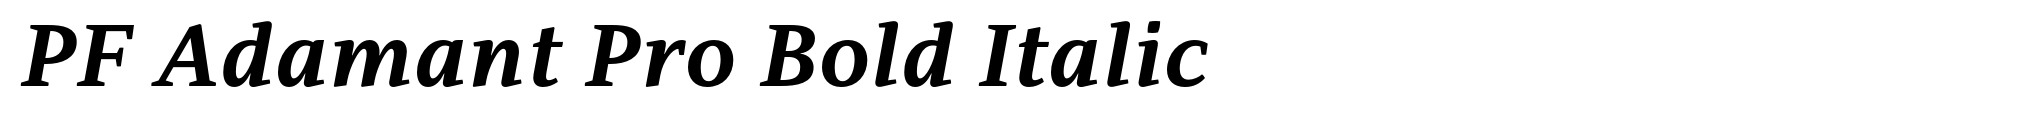 PF Adamant Pro Bold Italic image